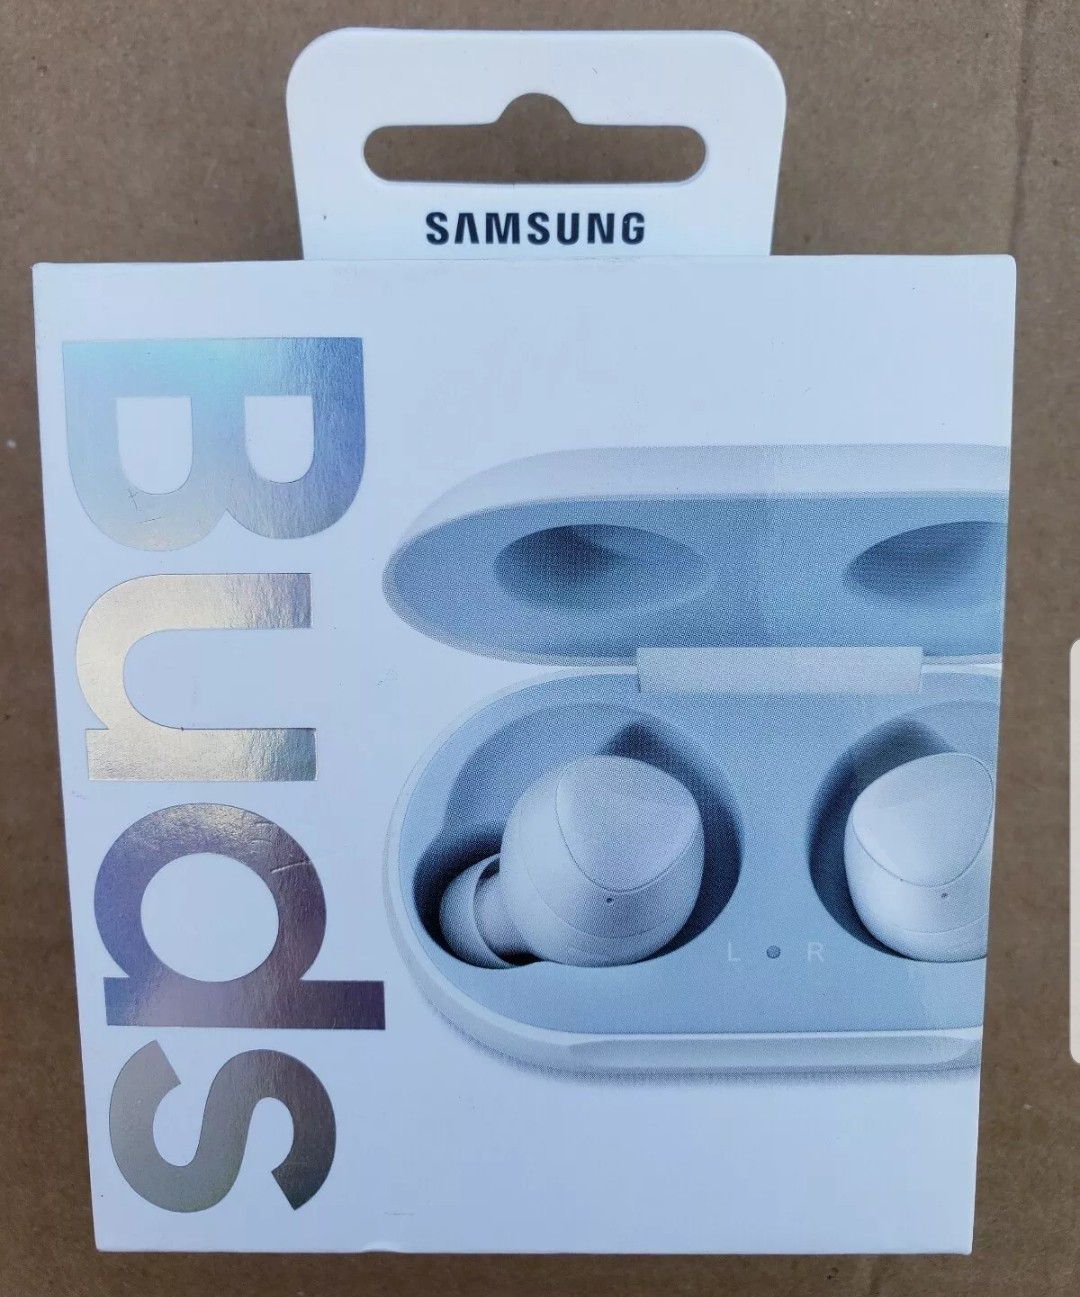 Samsung Galaxy Buds True Wireless Bluetooth Headphones 2019 - White